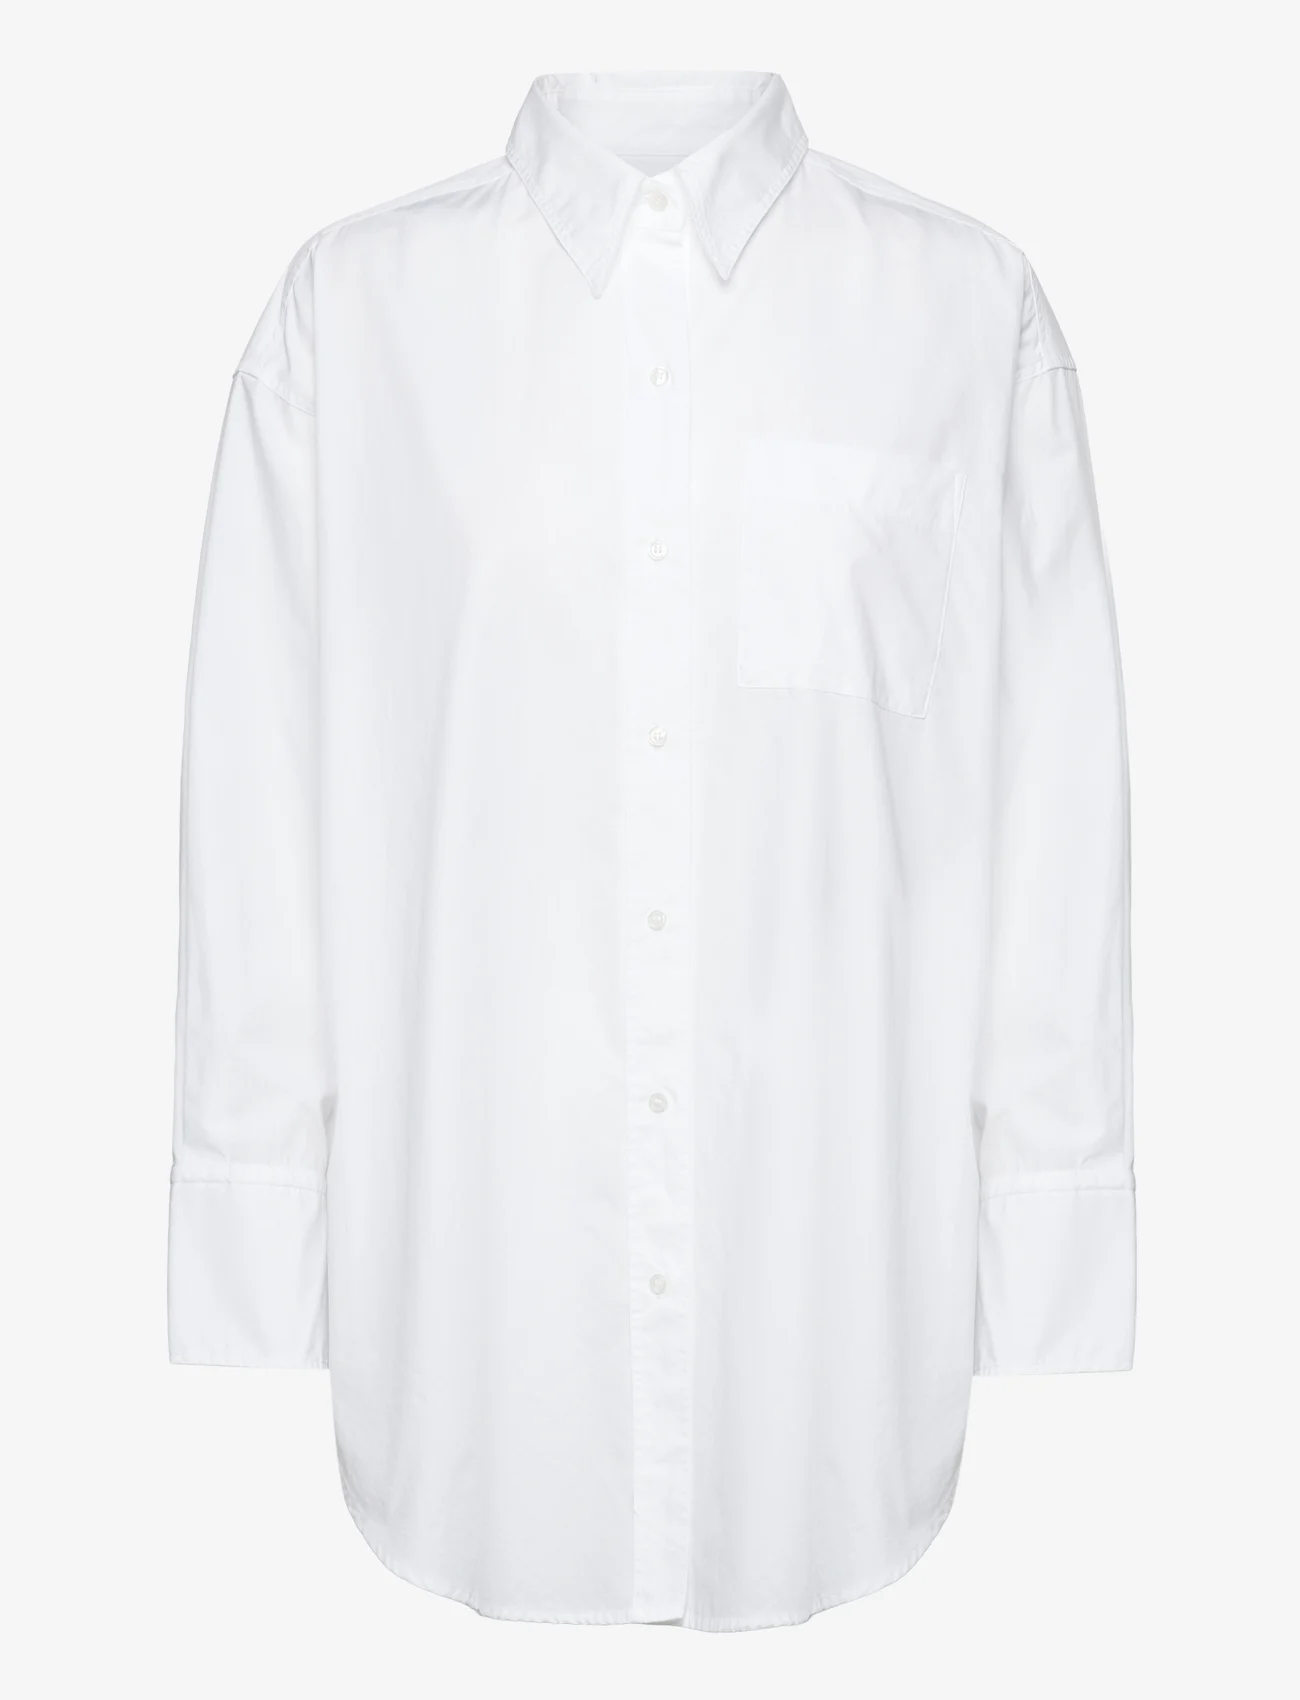 BOSS - C_Bostucci_1 - langærmede skjorter - white - 0